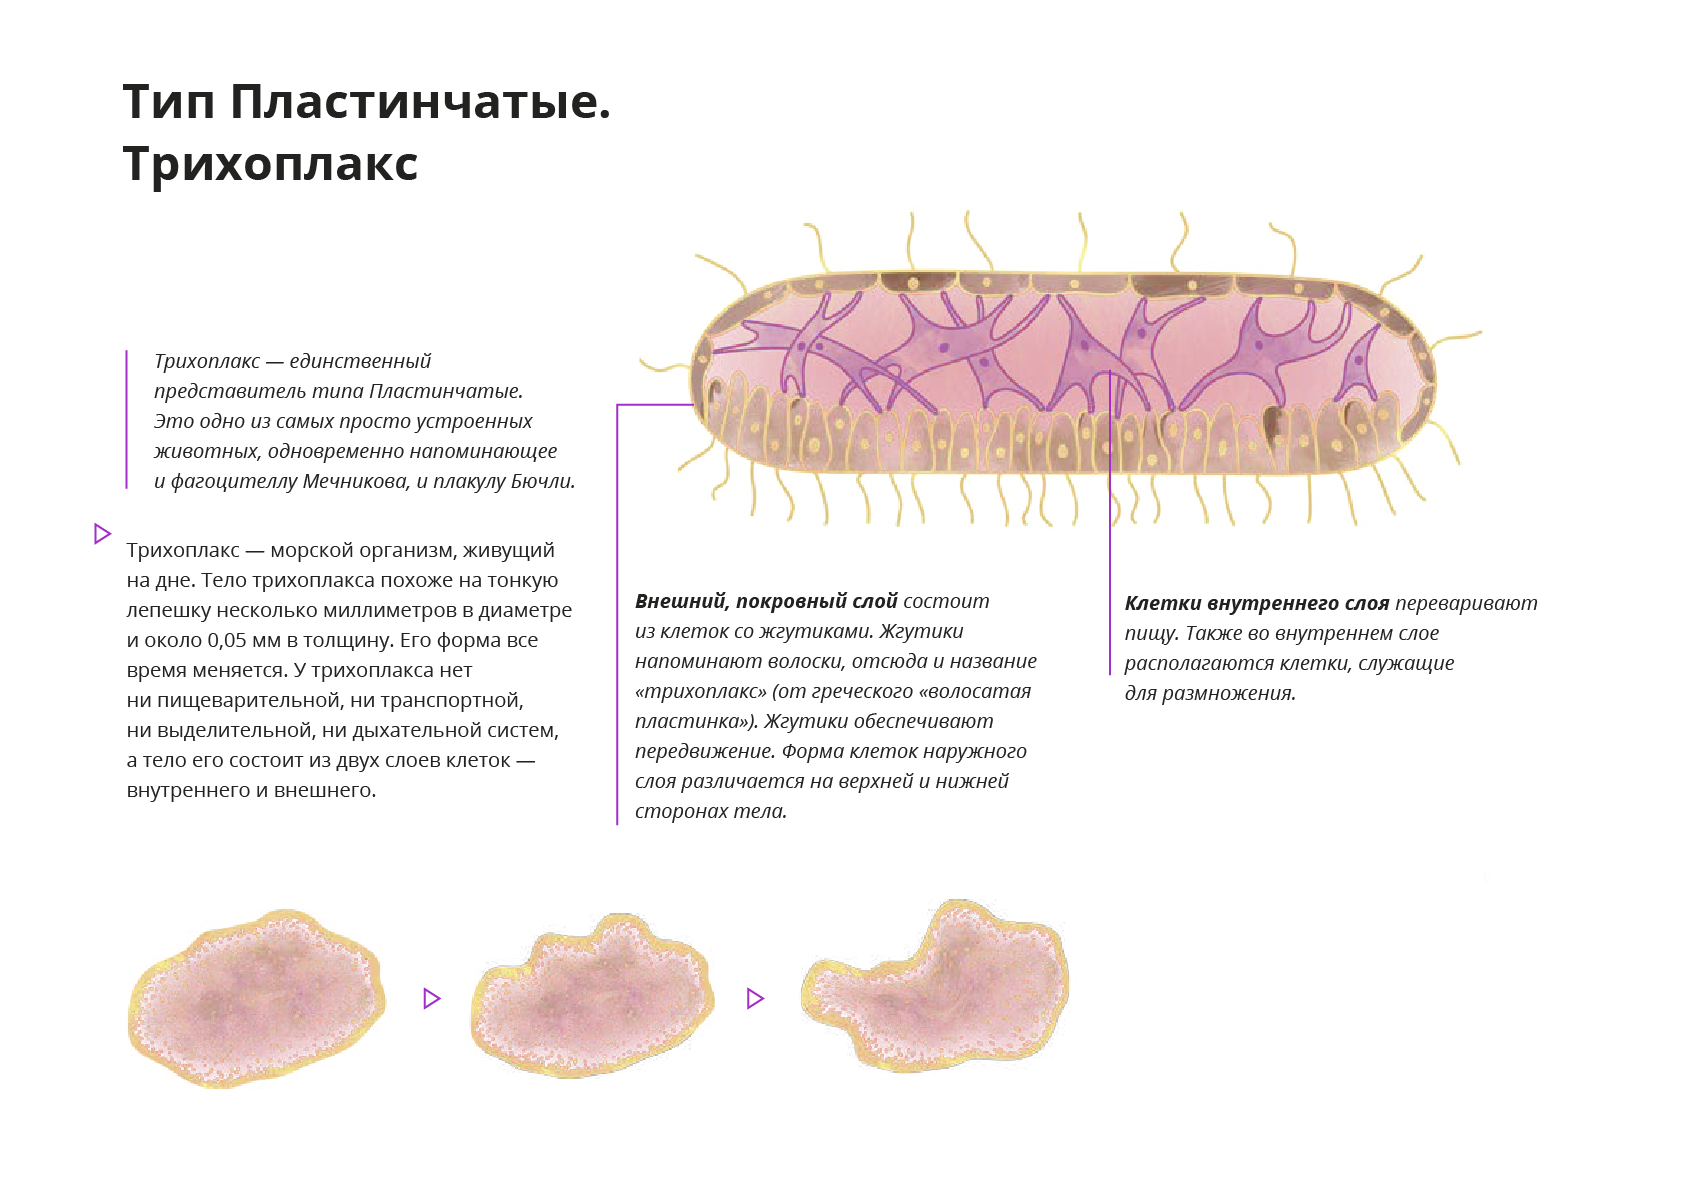 Тело пластинчатых имеет. Тип пластинчатые (трихоплакс). Тип пластинчатые (Placozoa). Тип пластинчатые пищеварительная система. Трихоплакс препарат.